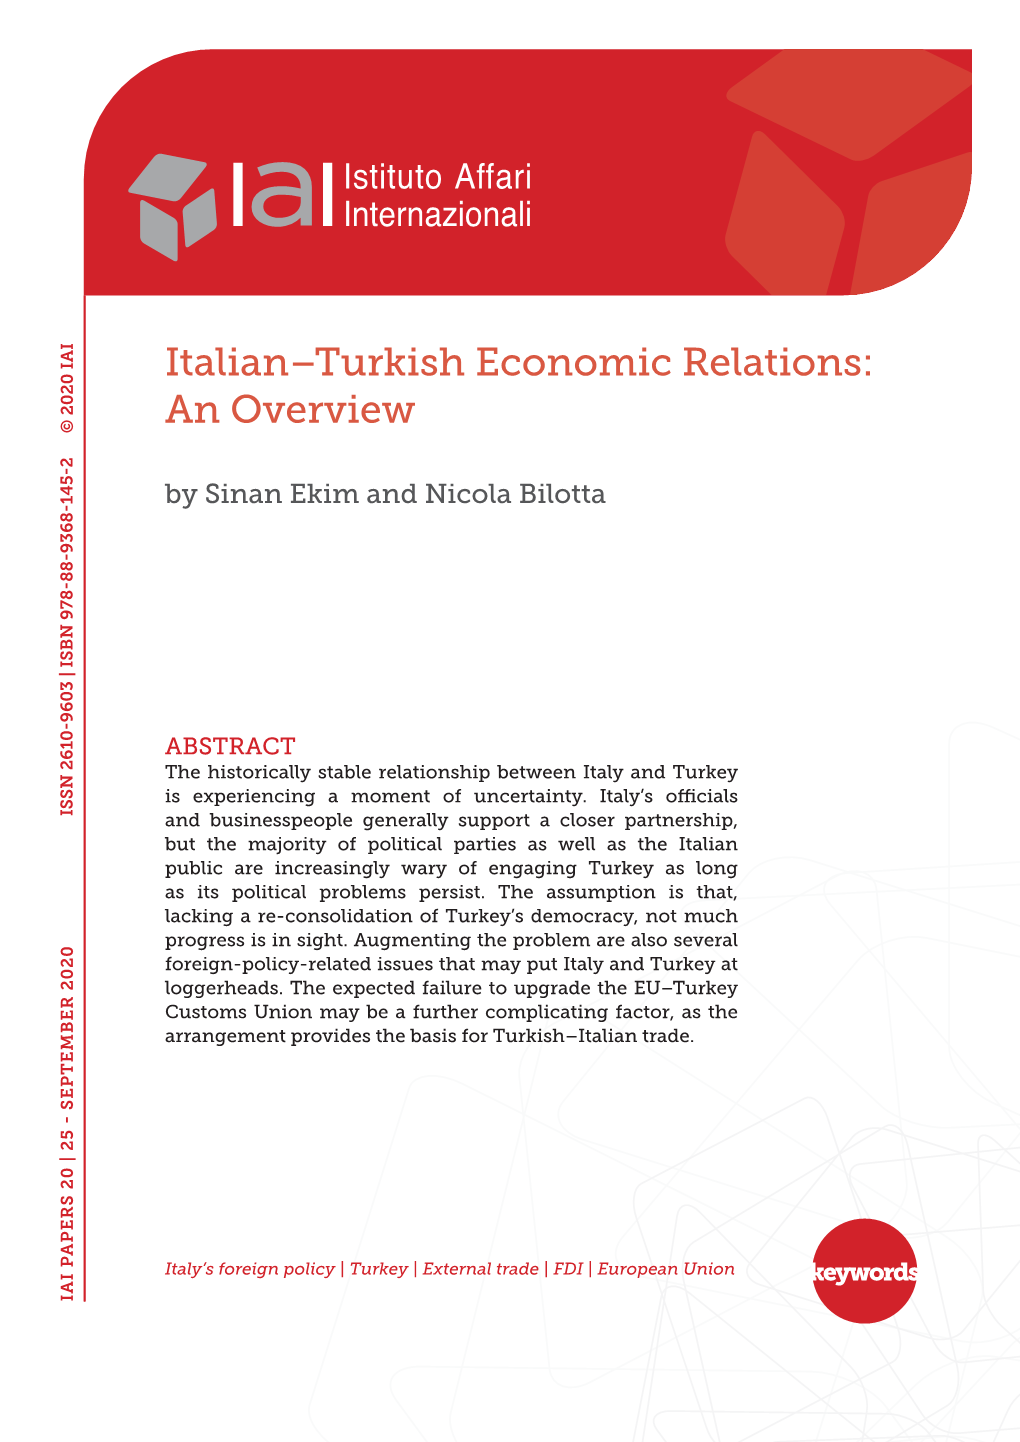 Italian-Turkish Economic Relations: an Overview